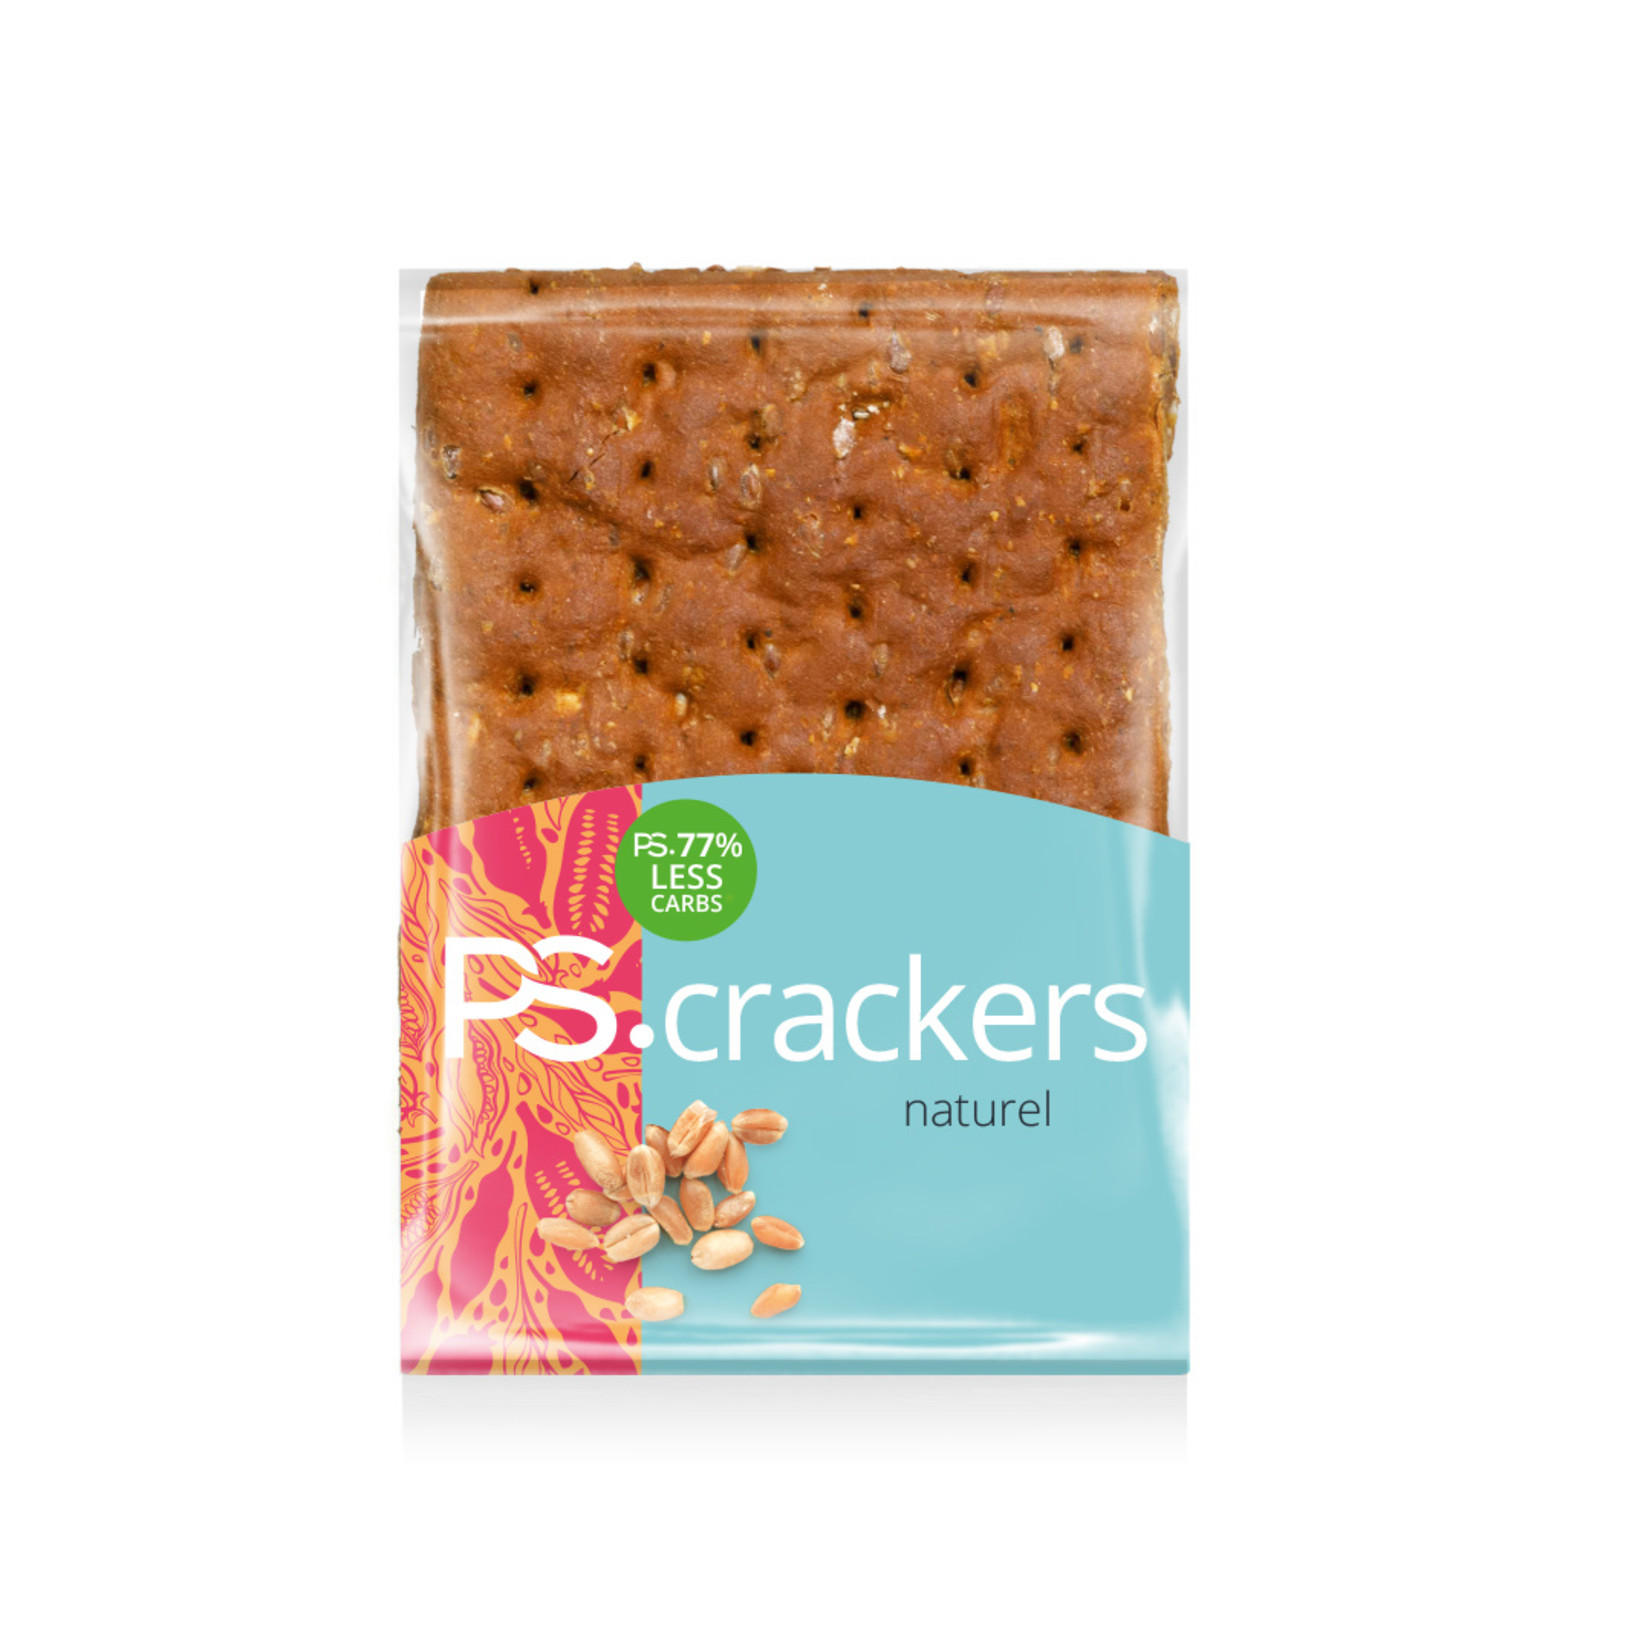 PS crackers natural